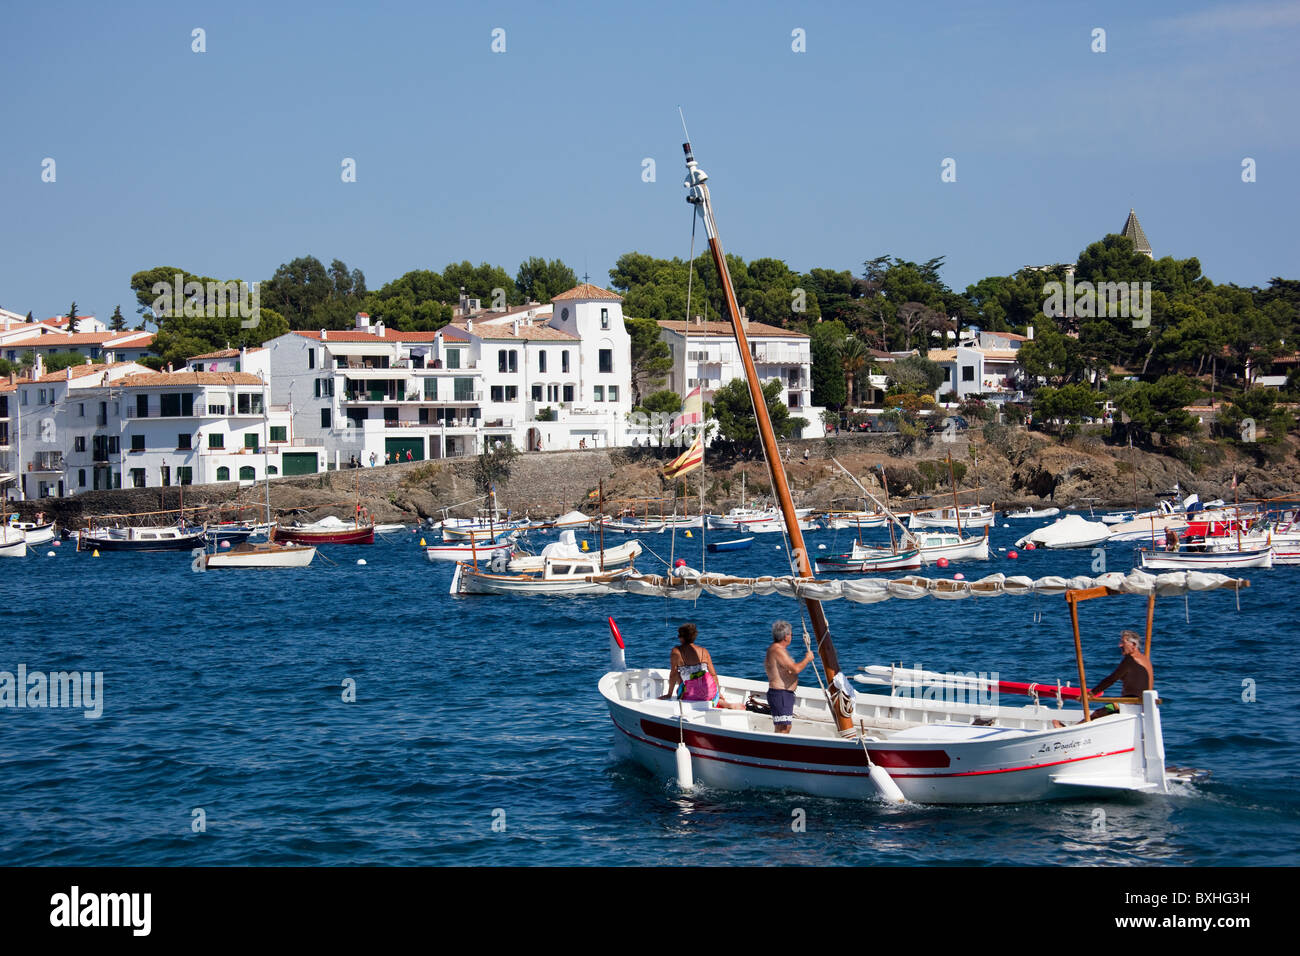 Bateau naviguant dans la baie de Cadaqués Emporda Catalogne Espagne Banque D'Images